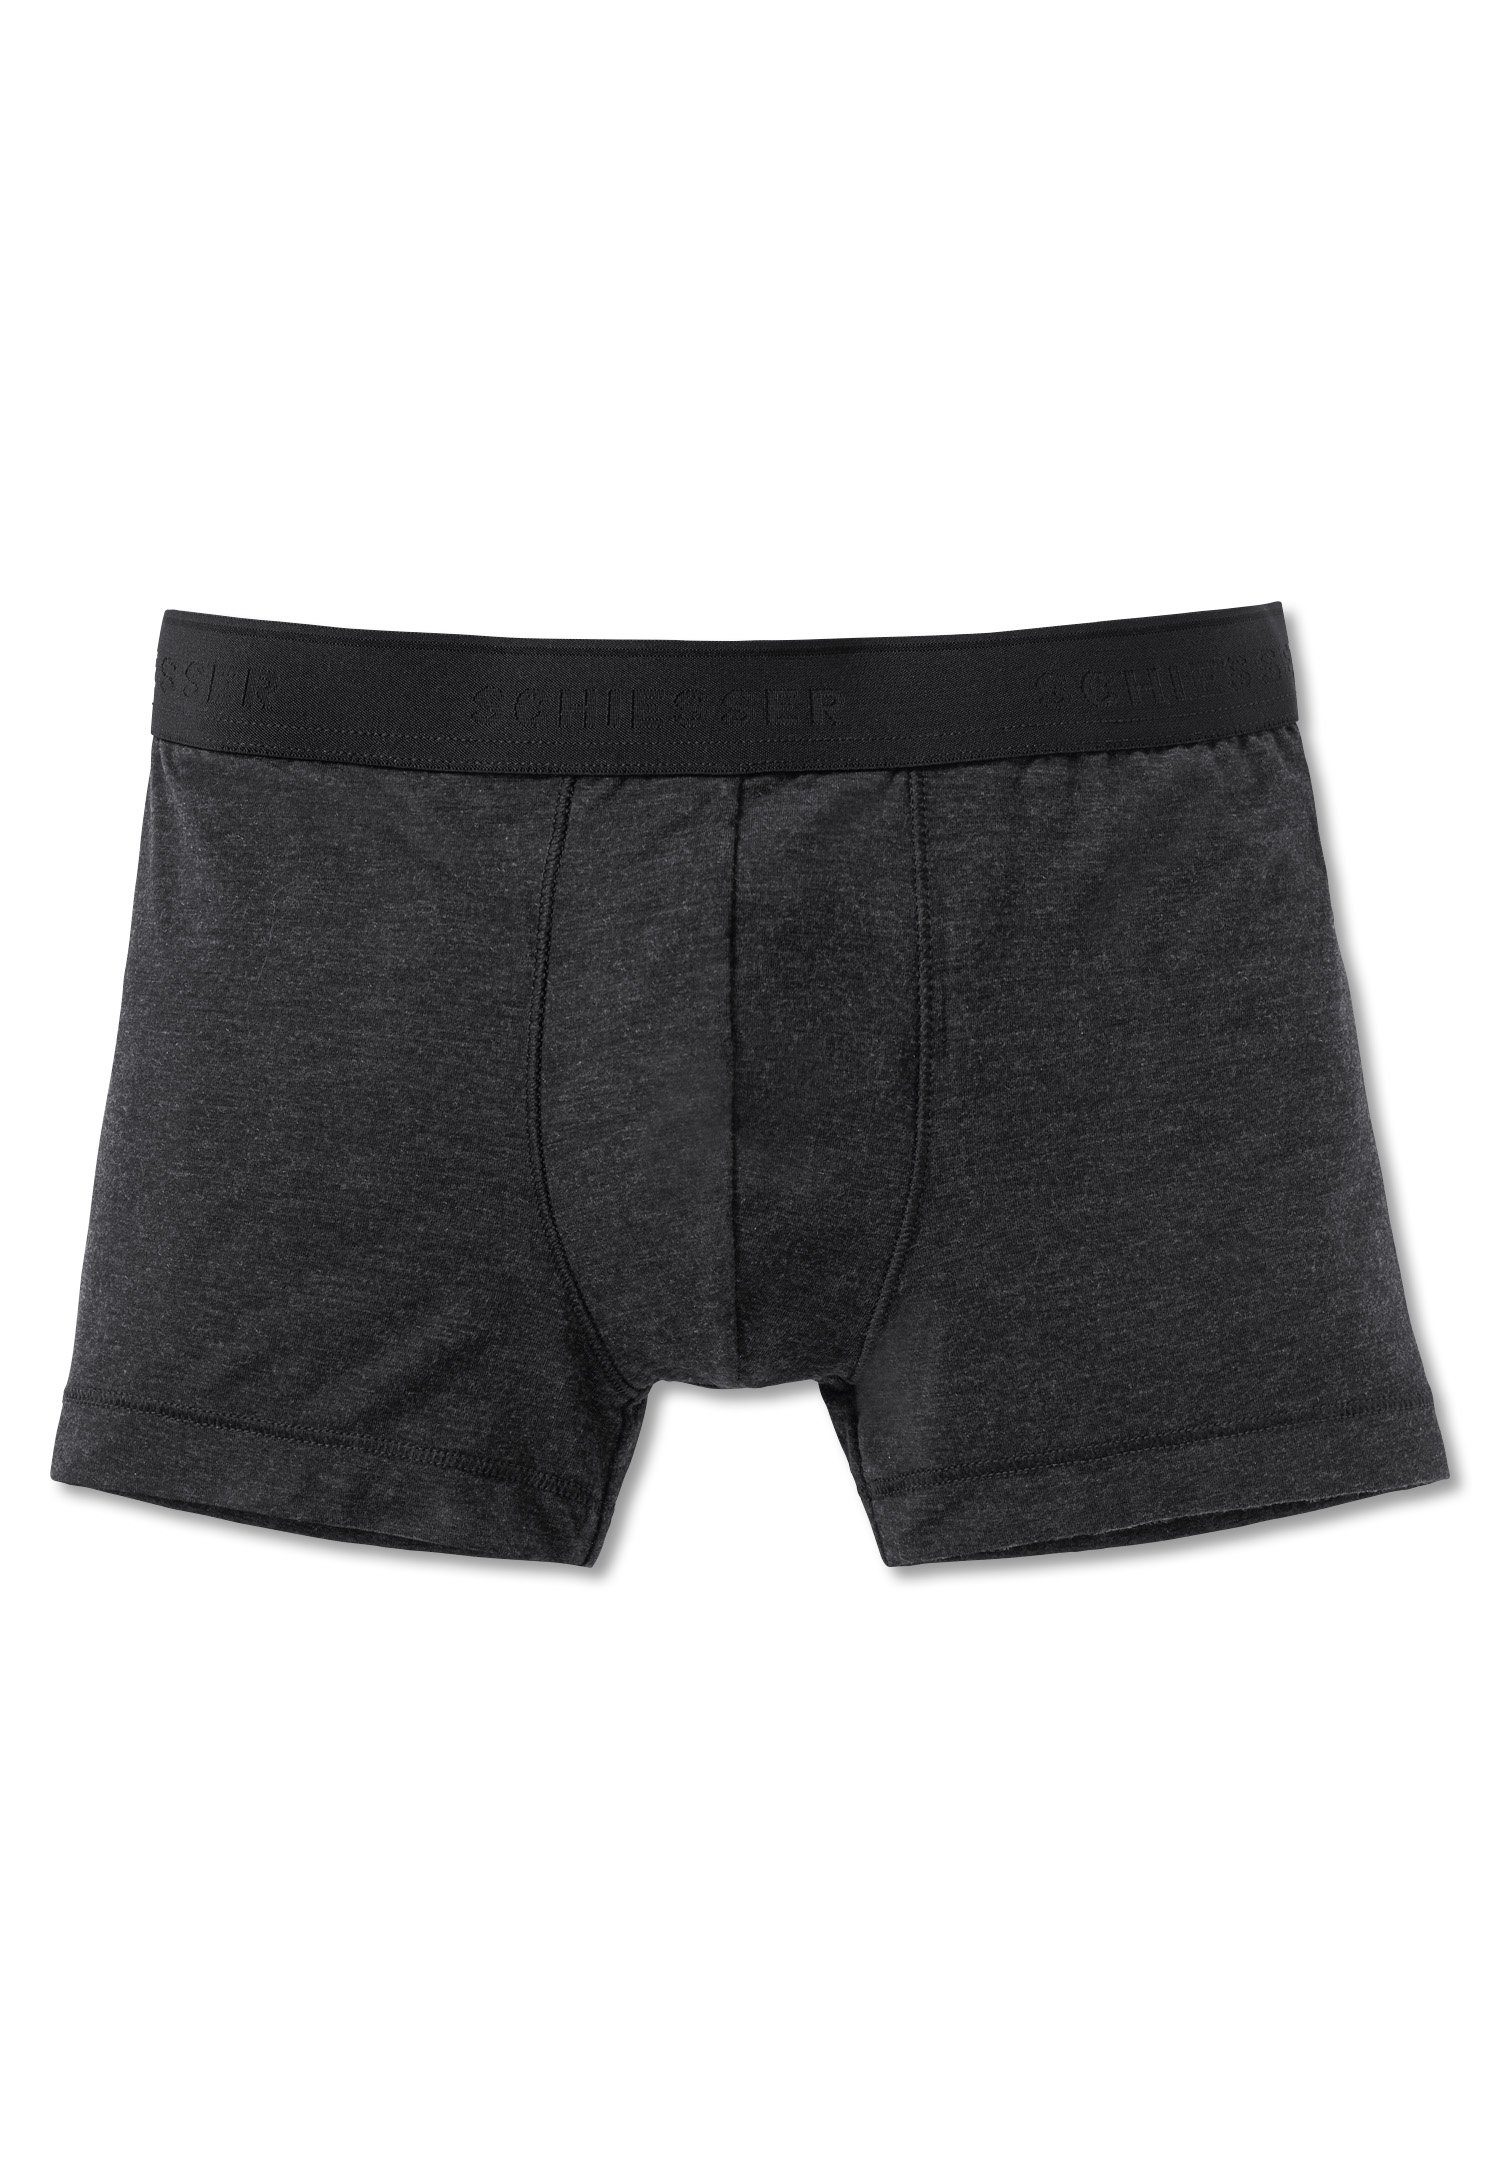 Schiesser Boxershorts (Set, 1-St., Set) Jungen Boxershorts, Hip-Shorts Pants, Unterhosen, Personal Fit schwarz